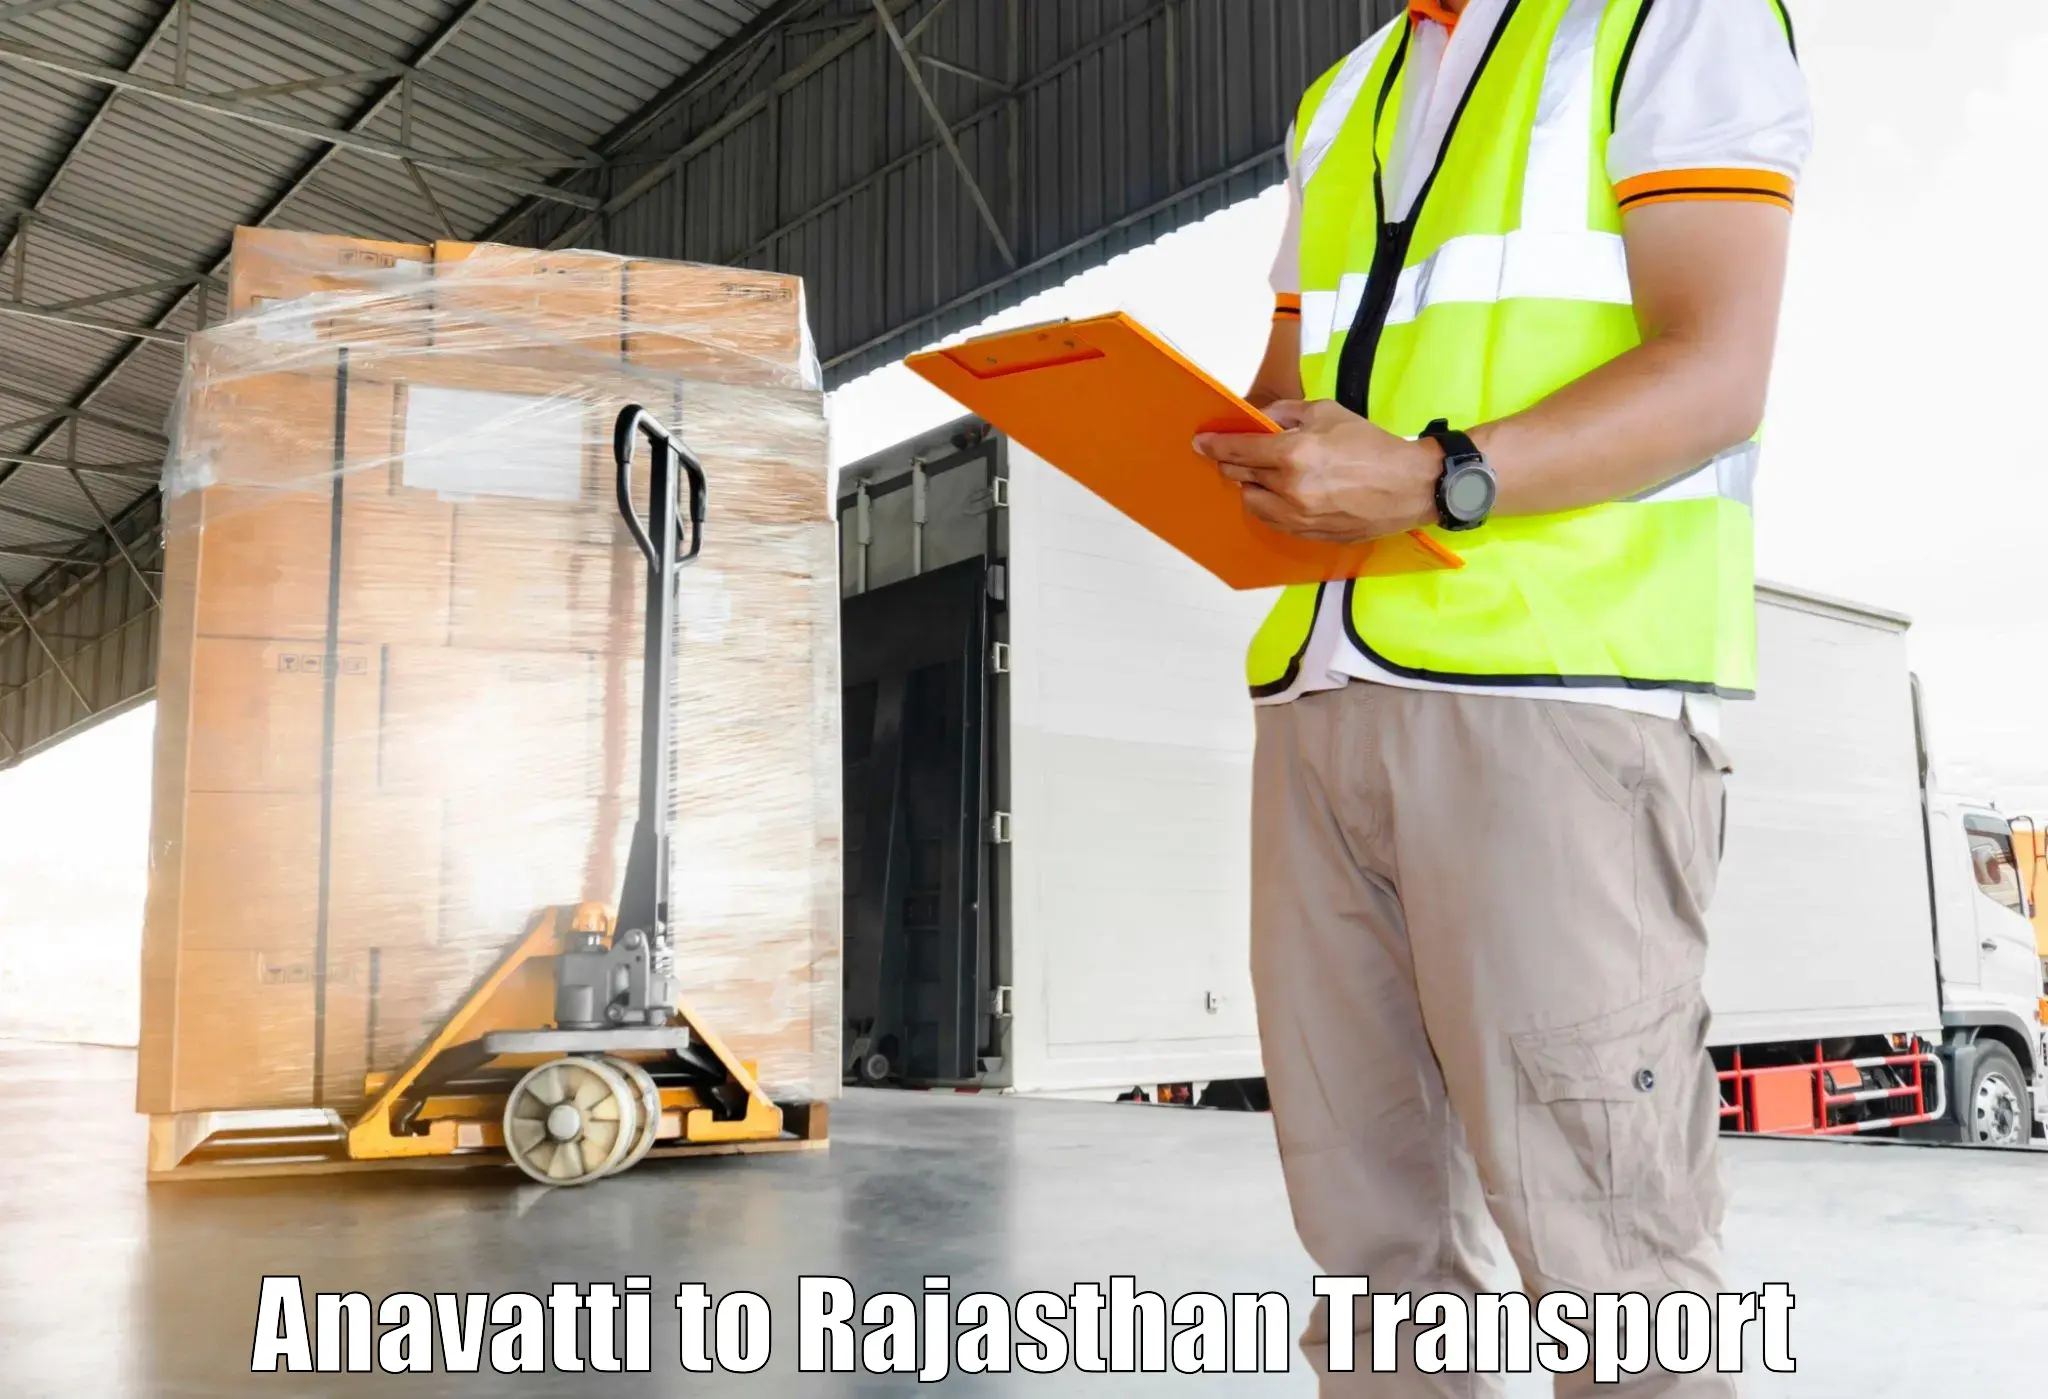 Shipping partner Anavatti to Asind